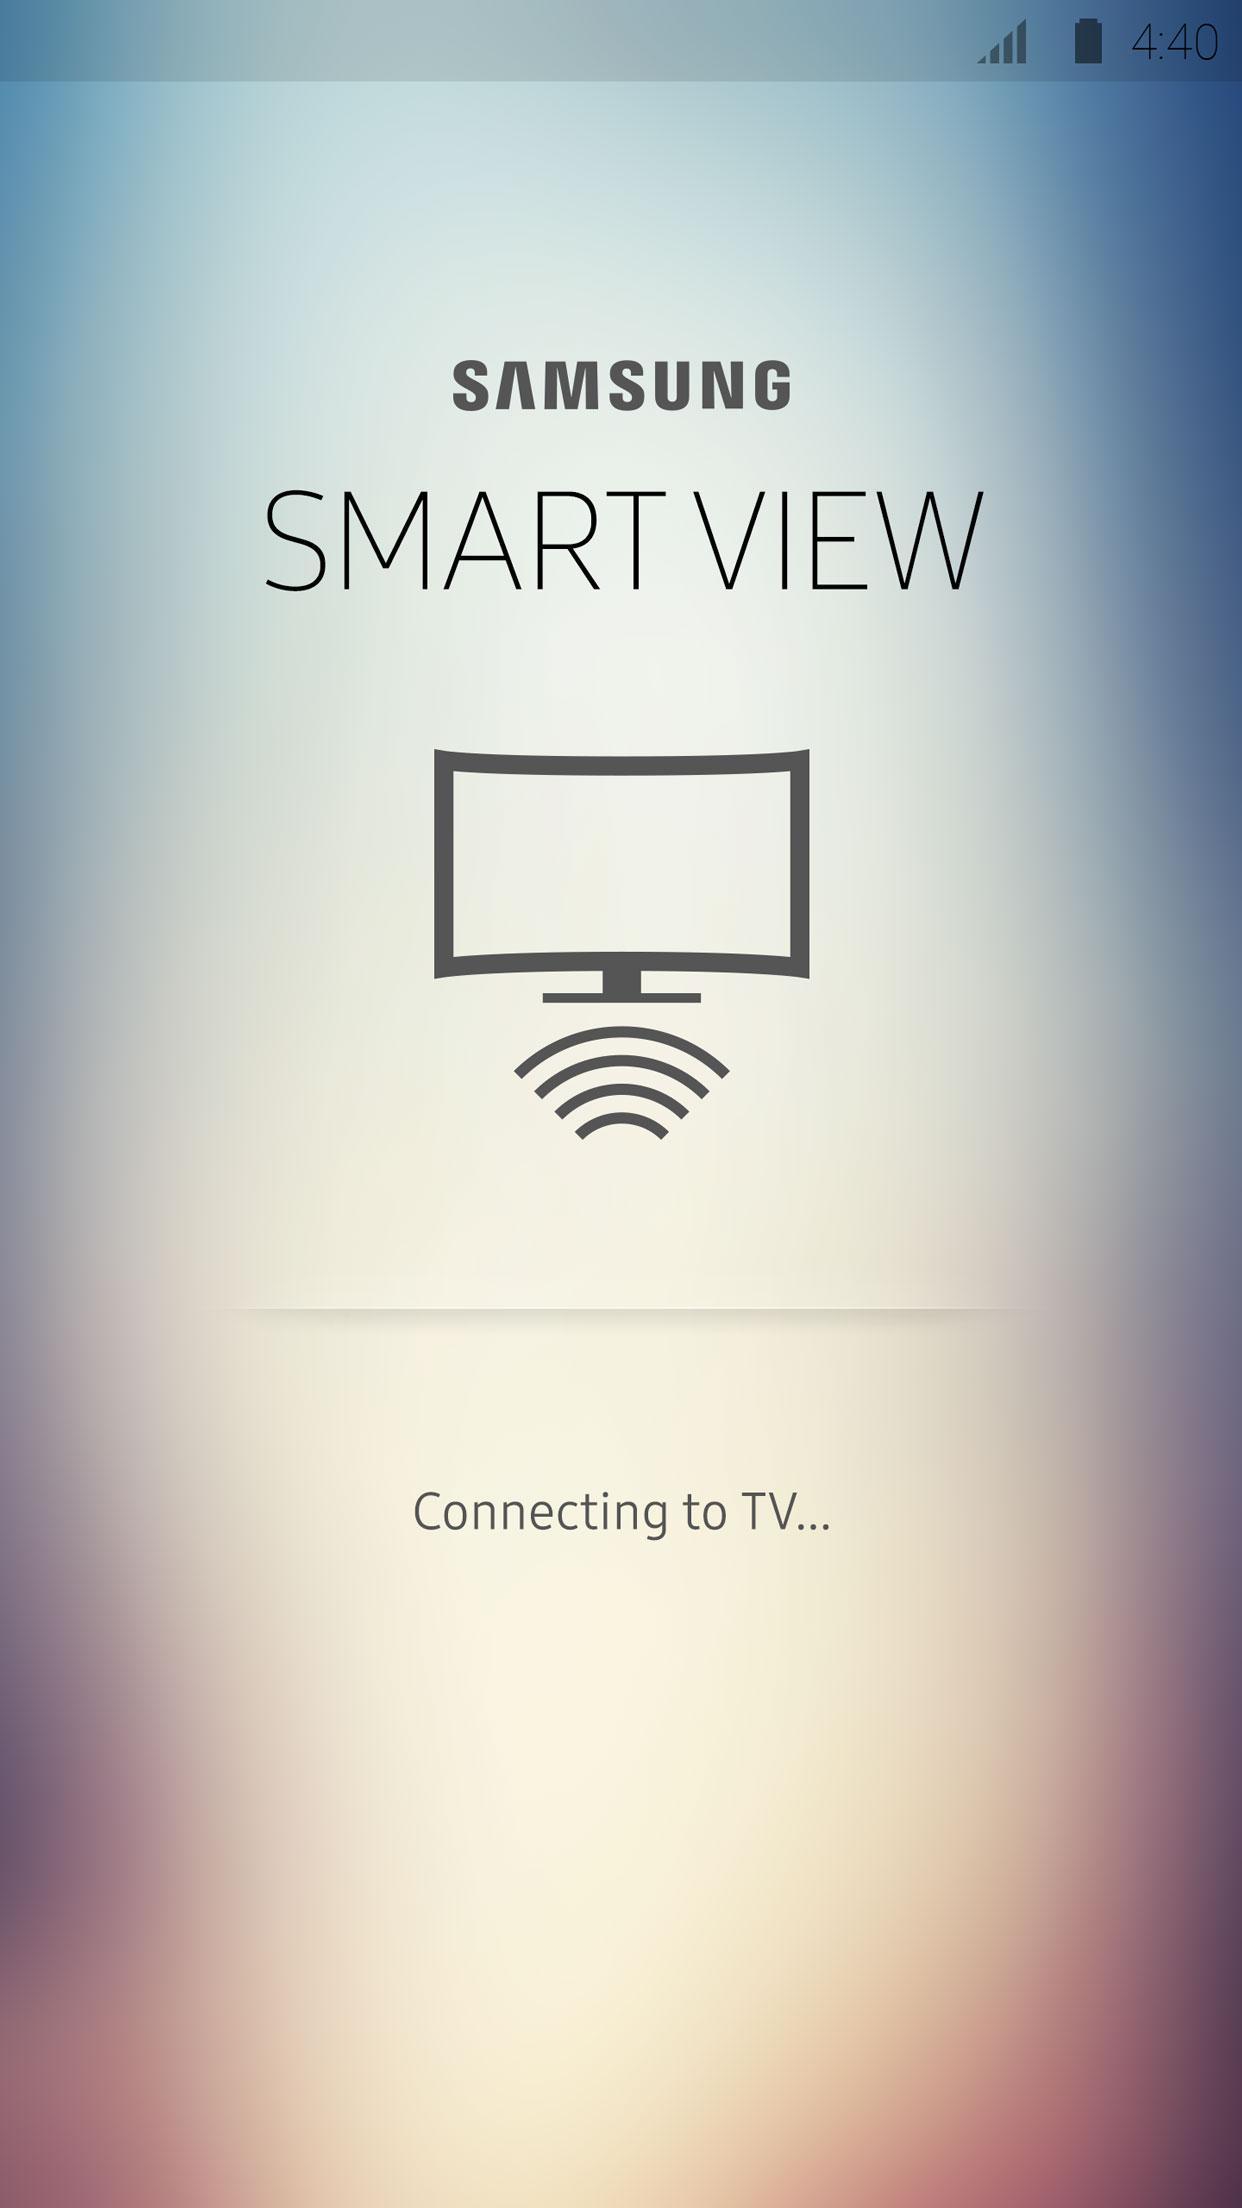 Tải Xuống Apk Samsung Smart View Cho Android